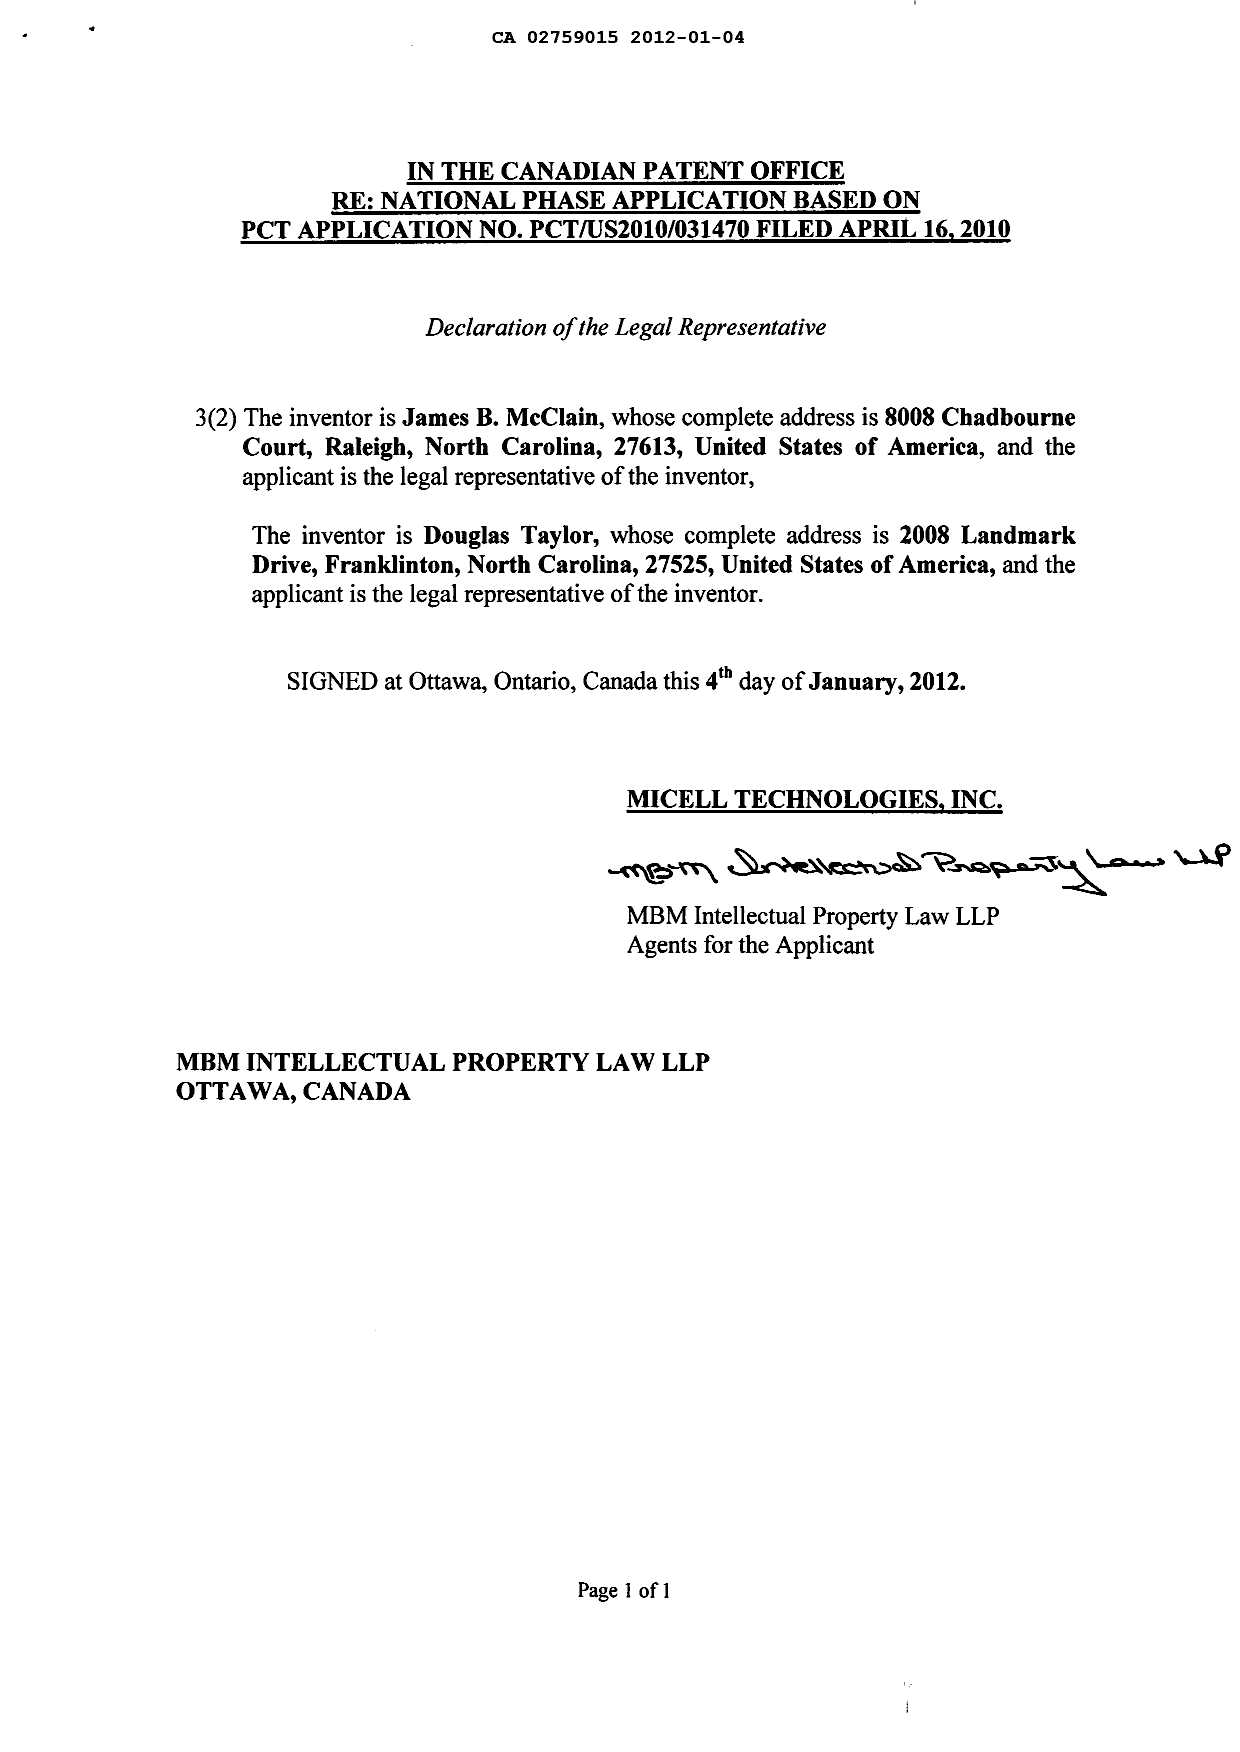 Canadian Patent Document 2759015. Correspondence 20111204. Image 3 of 3